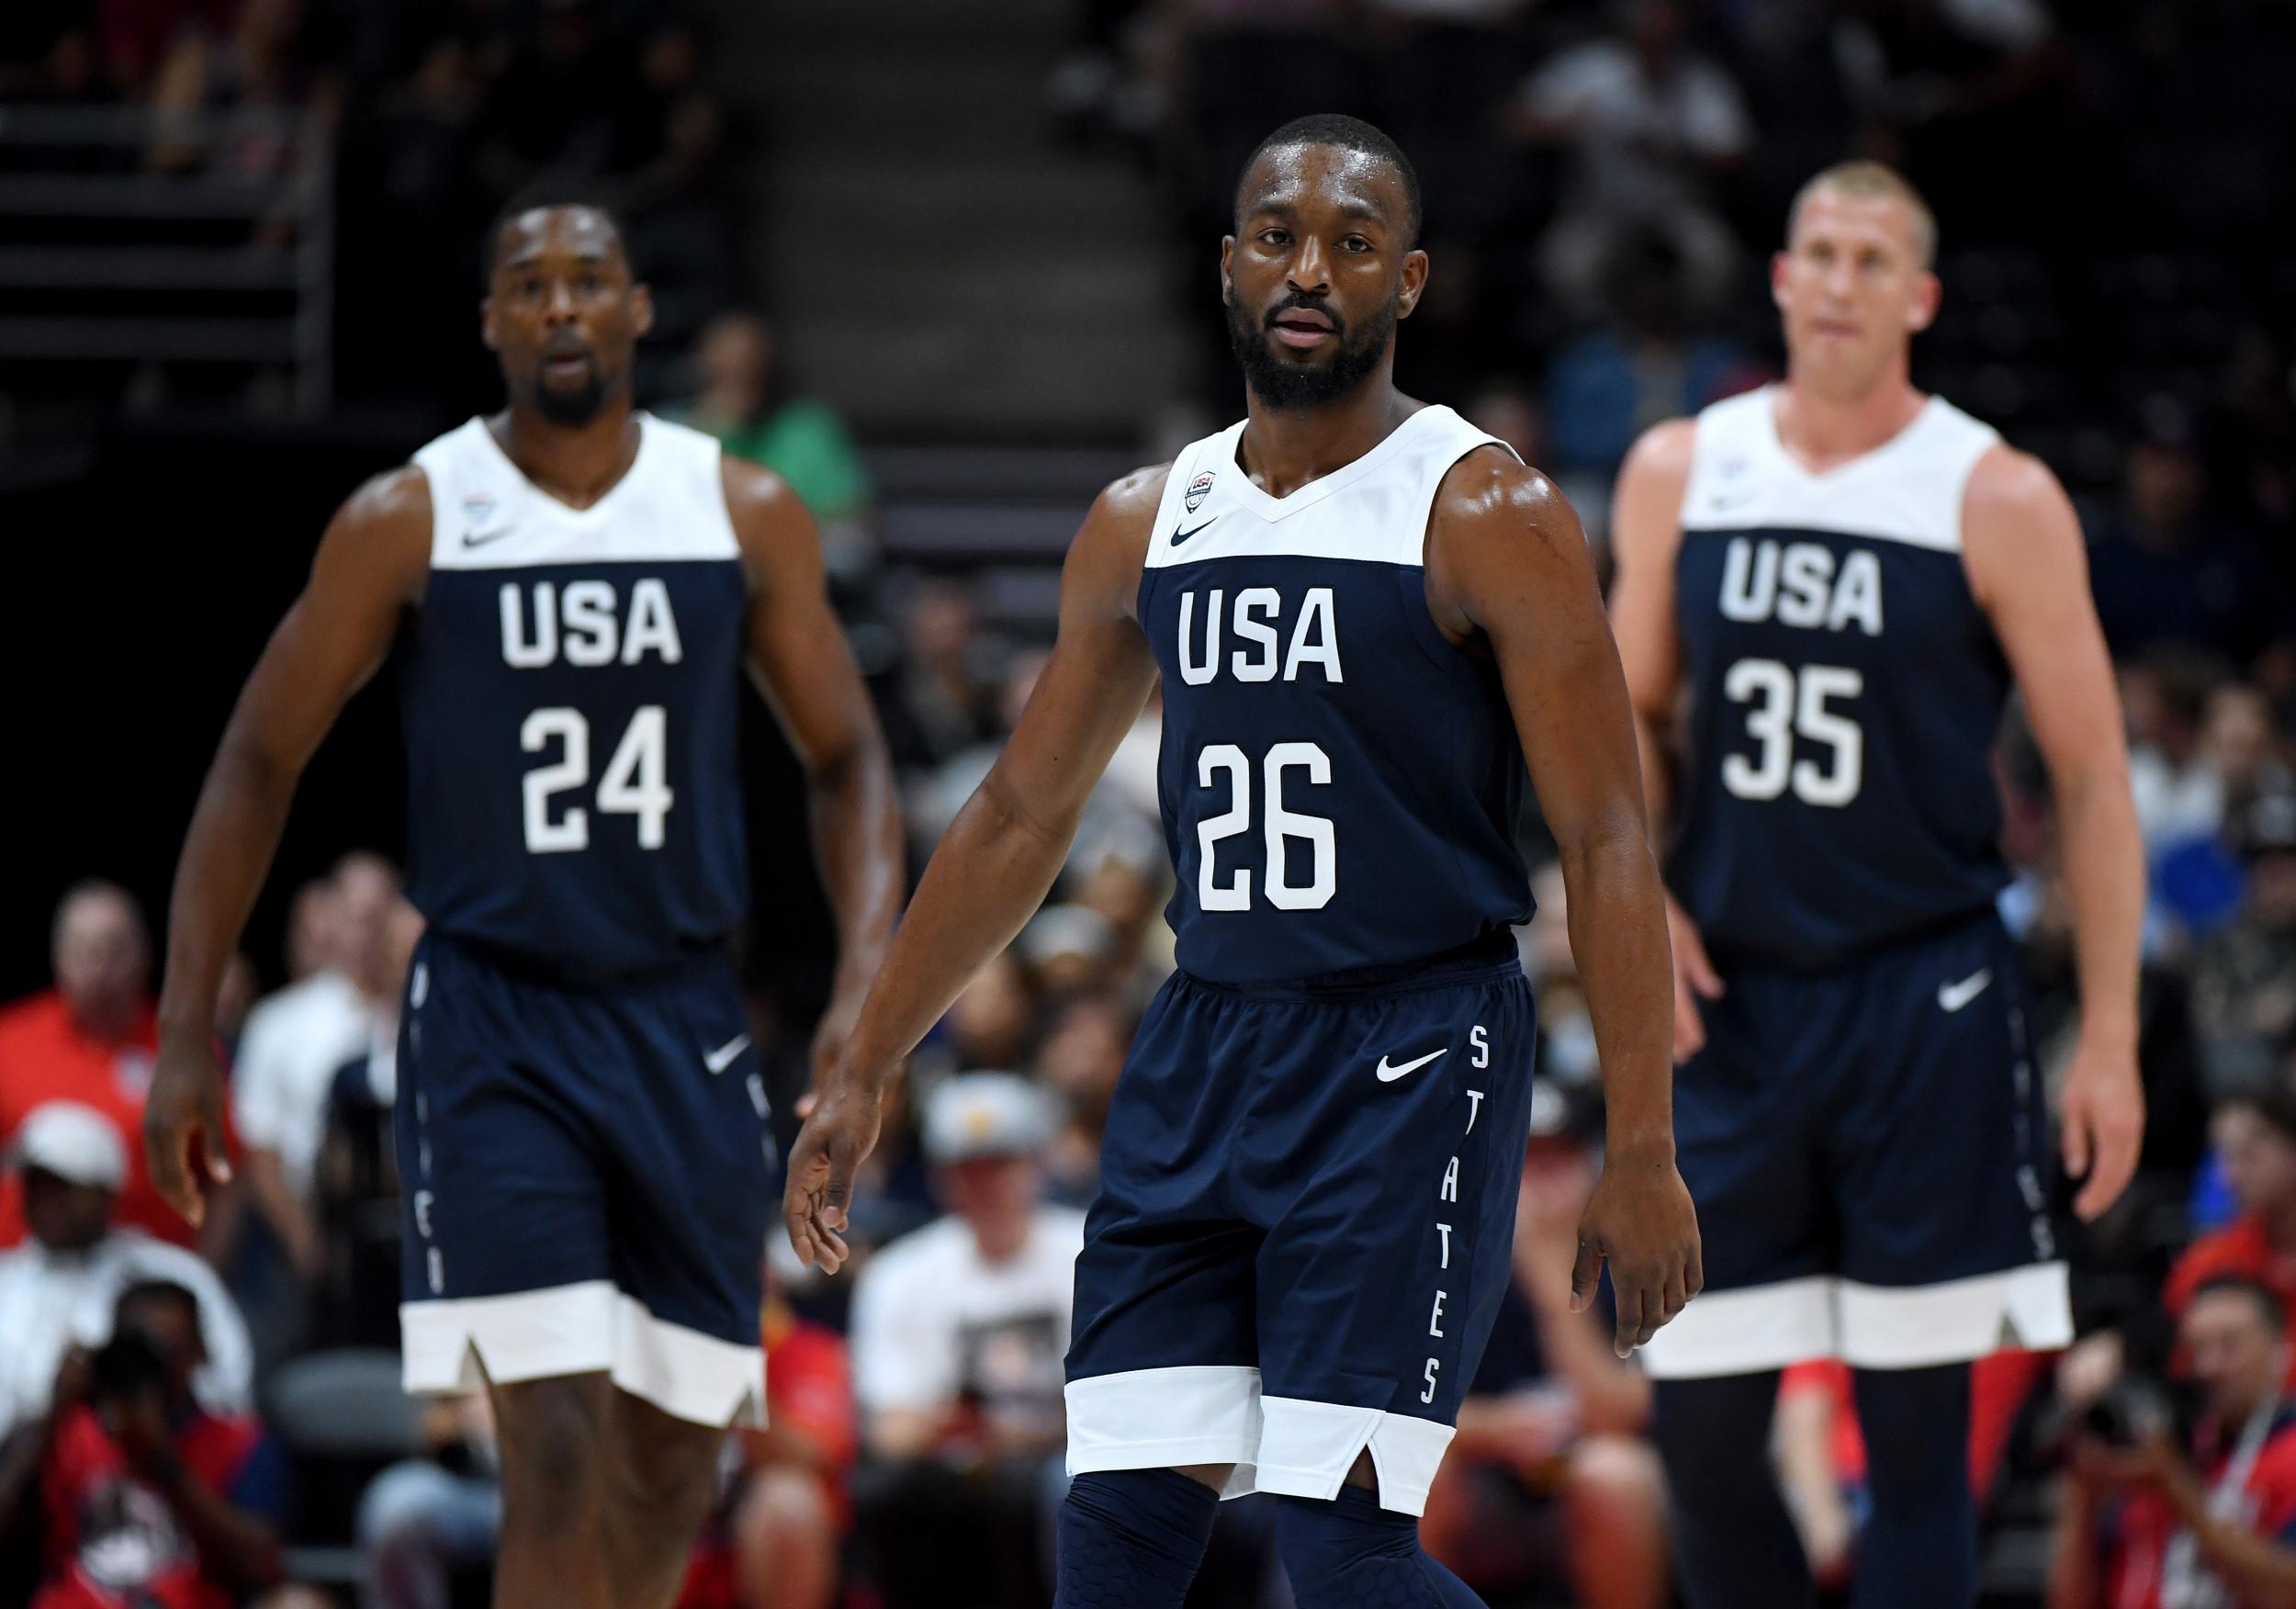 FIBA Basketball World Cup 2019 Schedule: Where to Watch Team USA vs